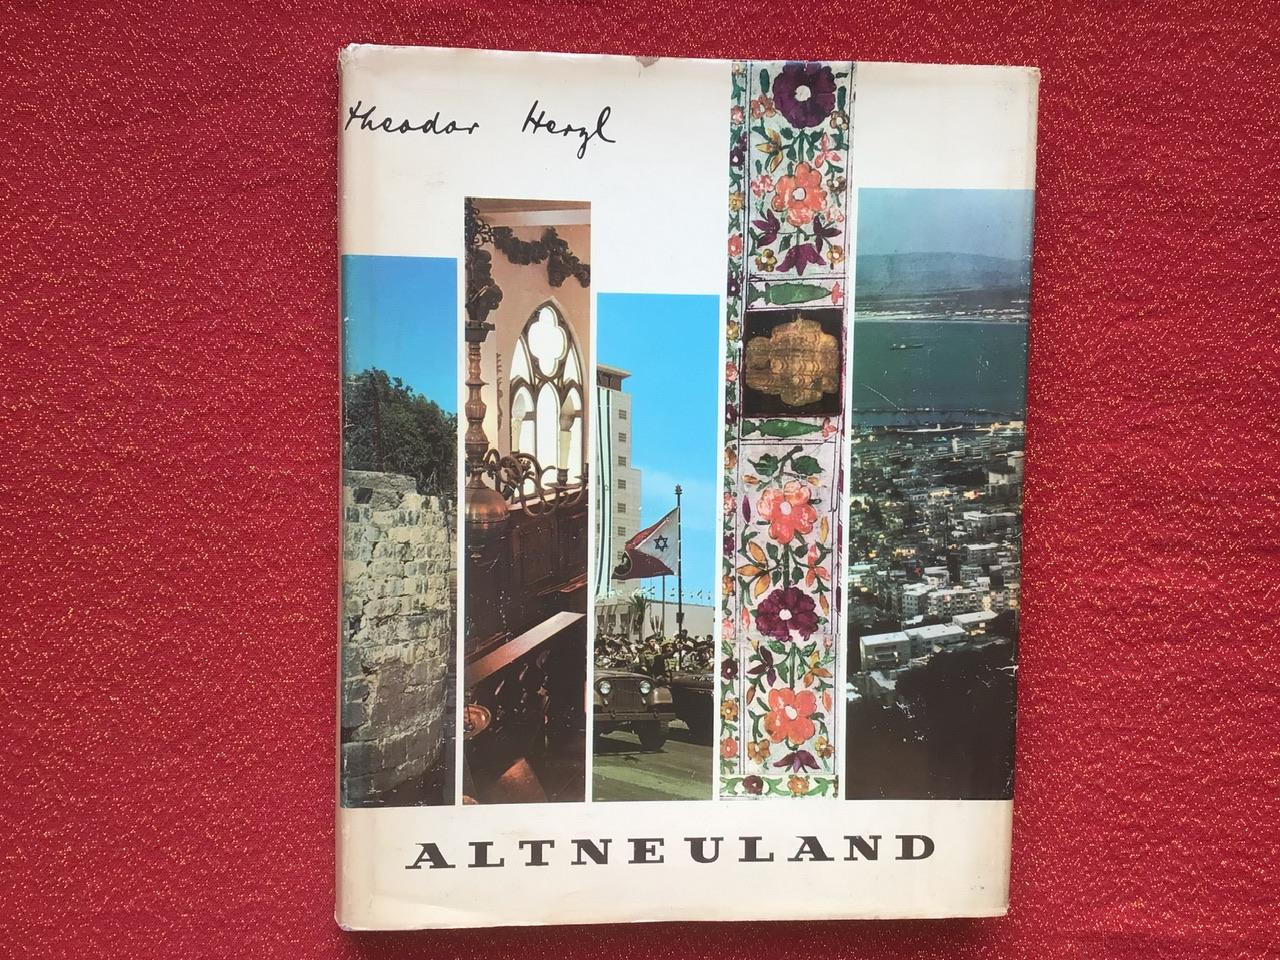 Herzl, Th. - Altneuland (Old - New Land)